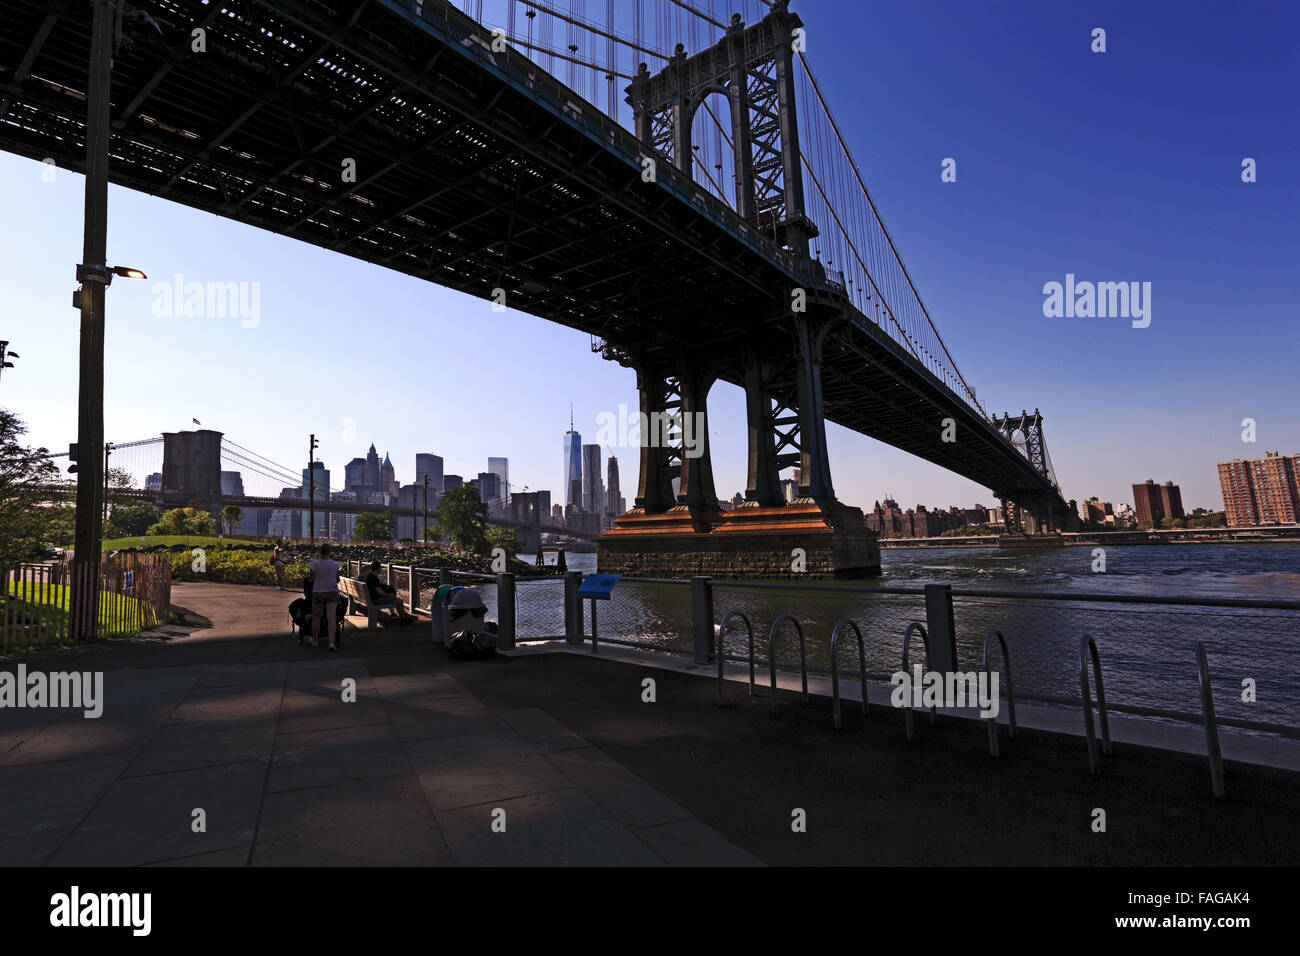 Under the Manhattan Bridge DUMBO neighborhood of Brooklyn New York City Stock Photo